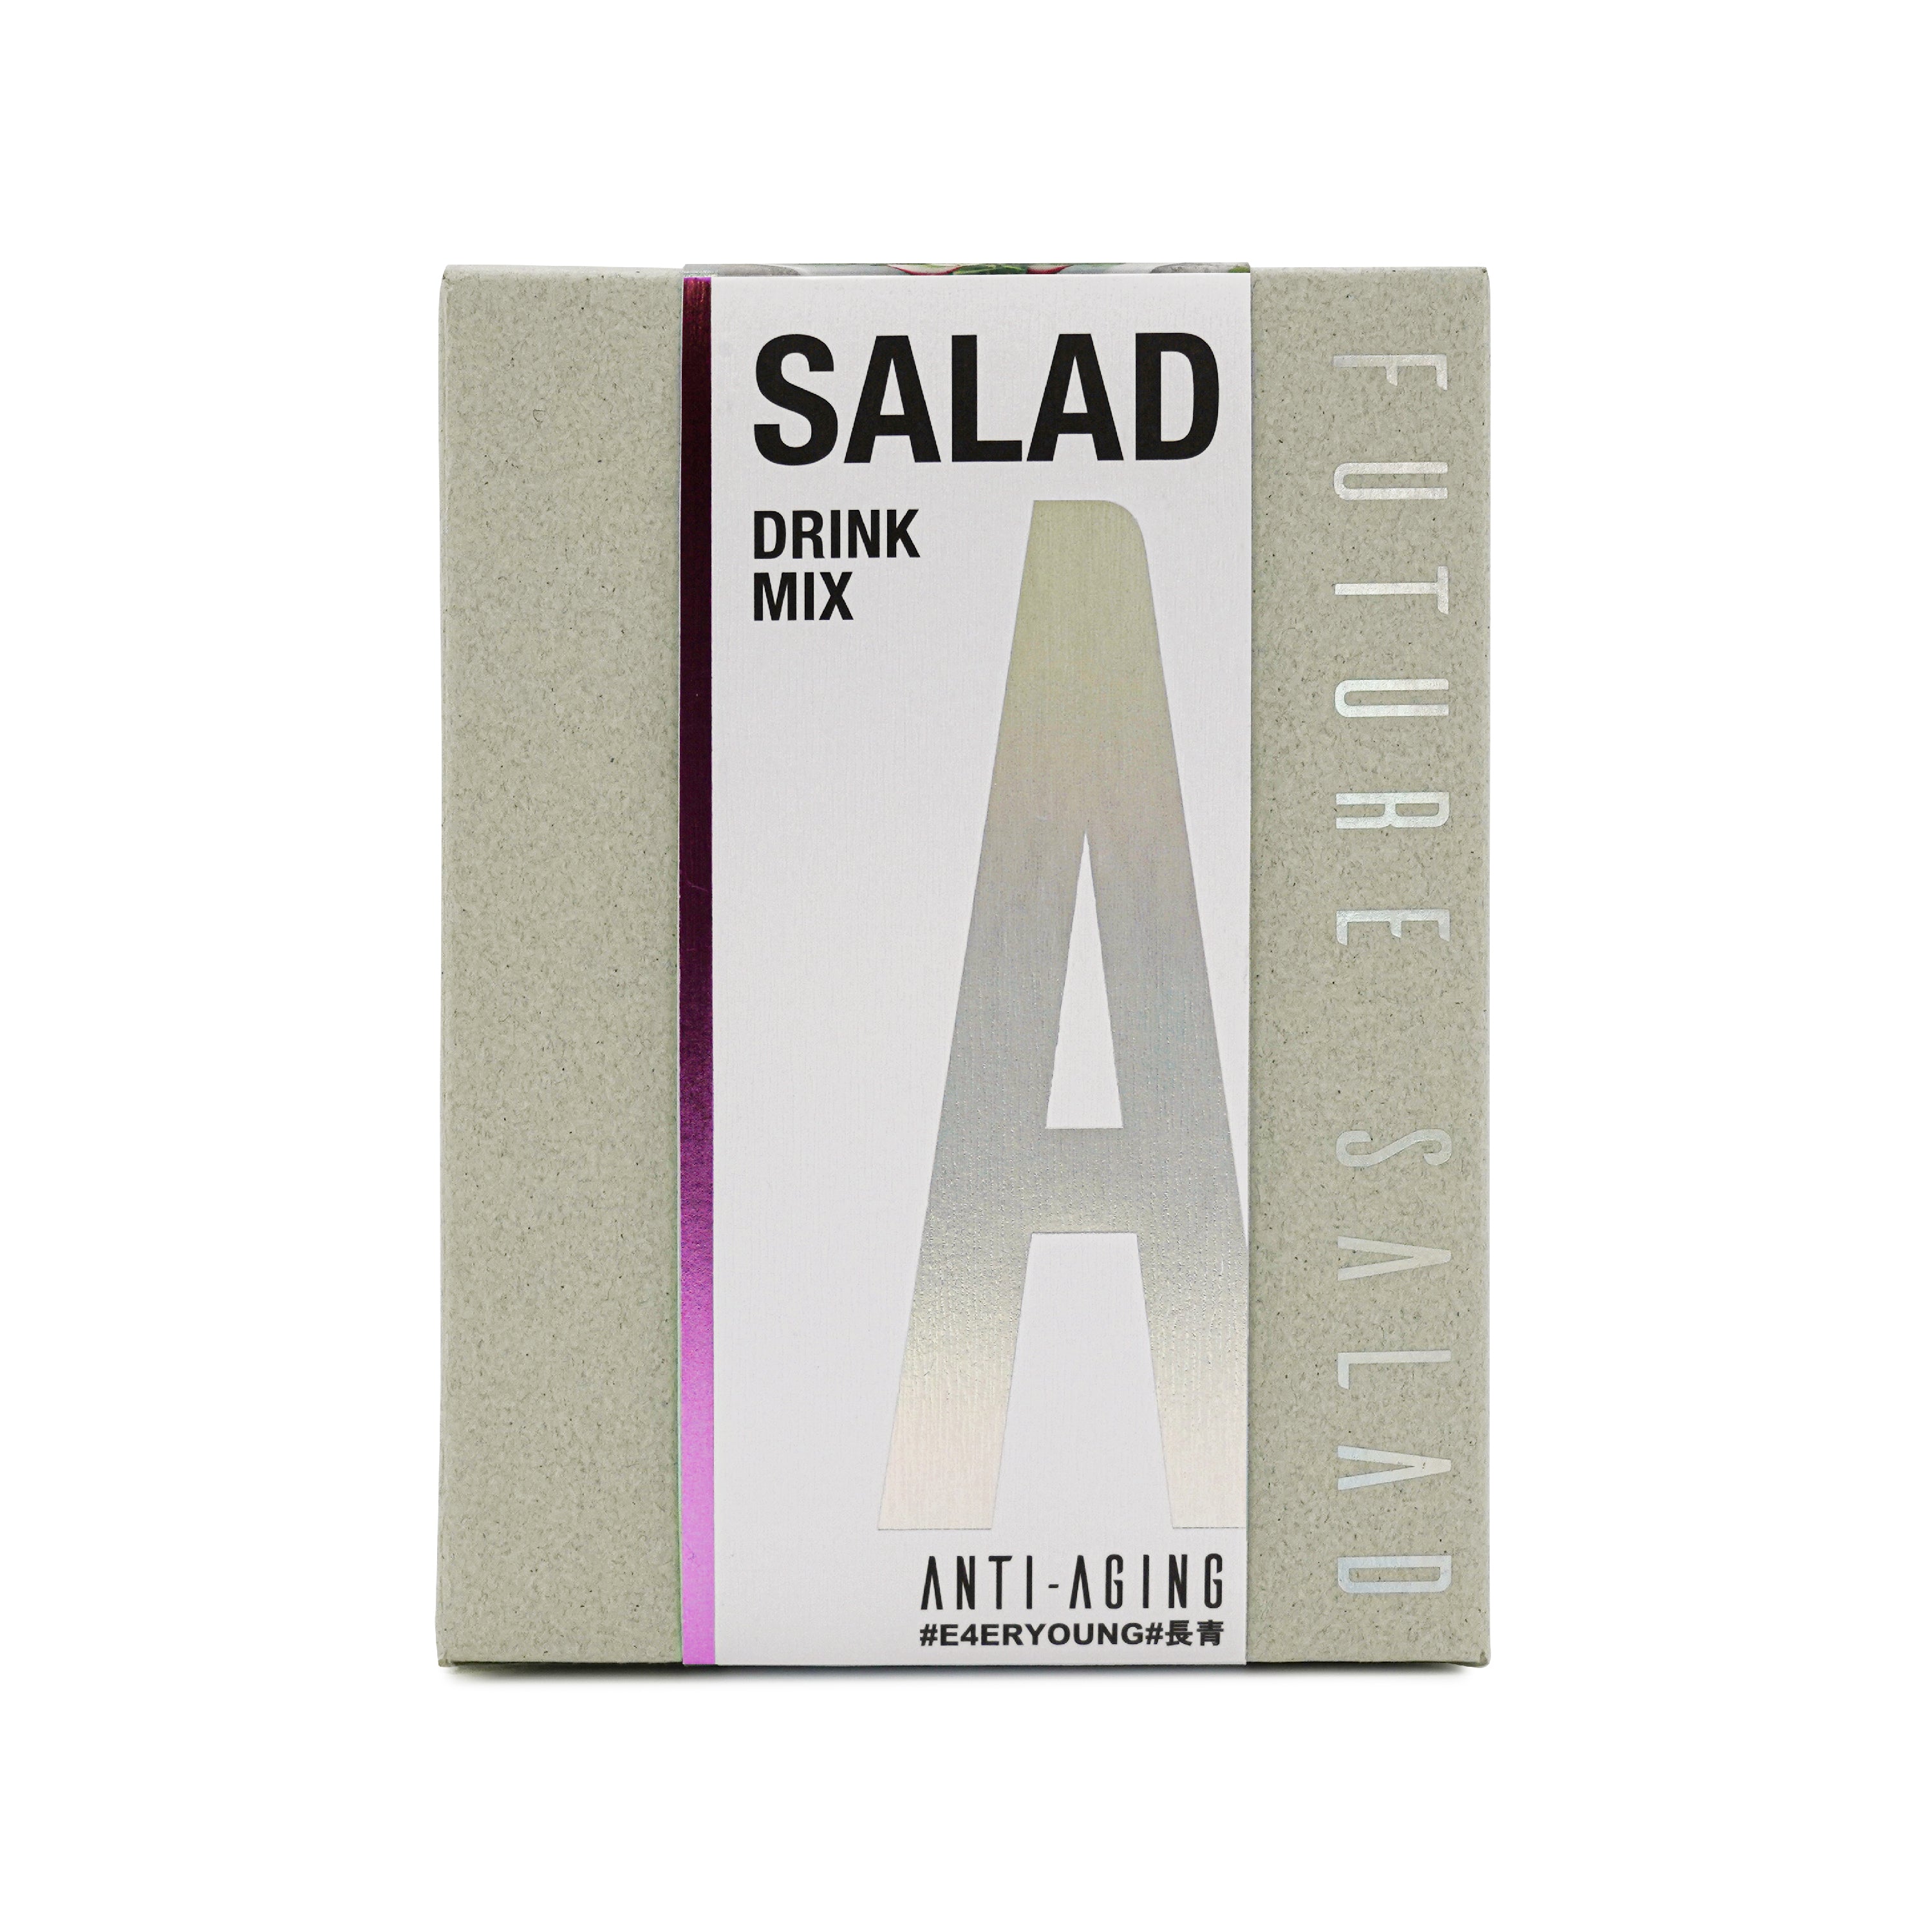 凍齡新沙律 Anti-Aging Salad Drink Mix 7包裝 | Salad Drink Mix | Future Salad